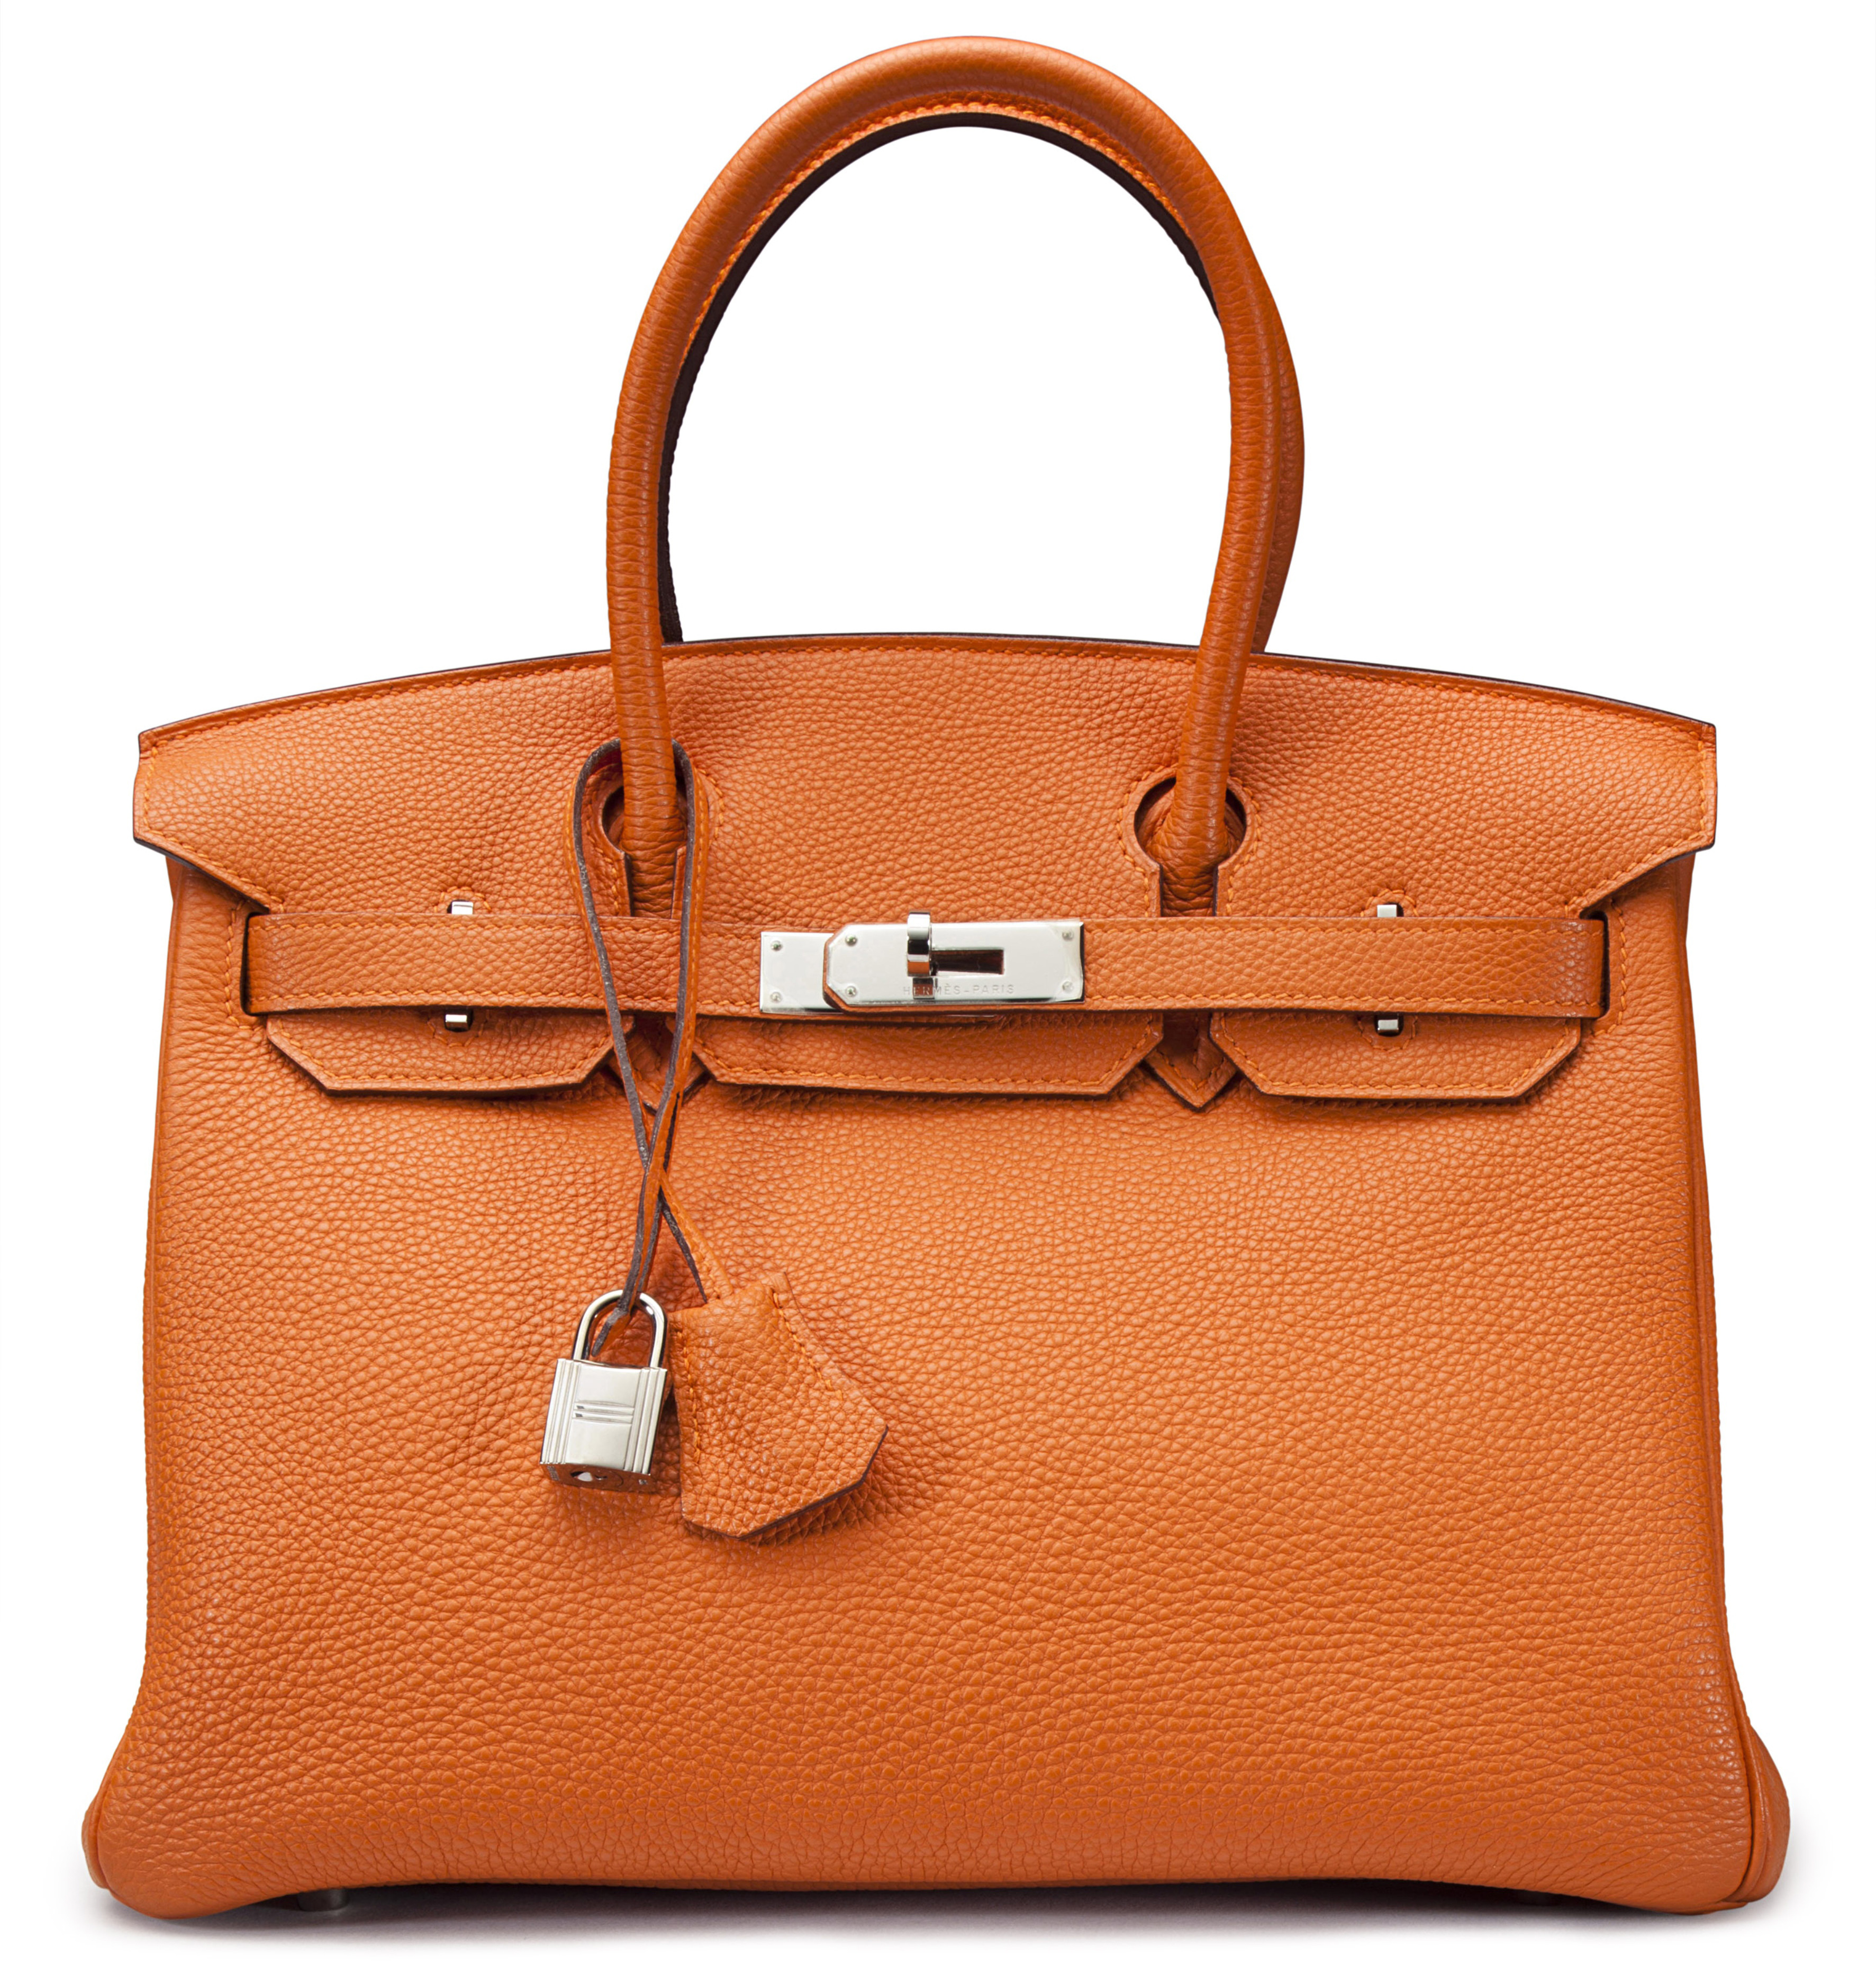 Hermes Birkin Bag, More Than Just a Bag | www.bagsaleusa.com/product-category/classic-bags/